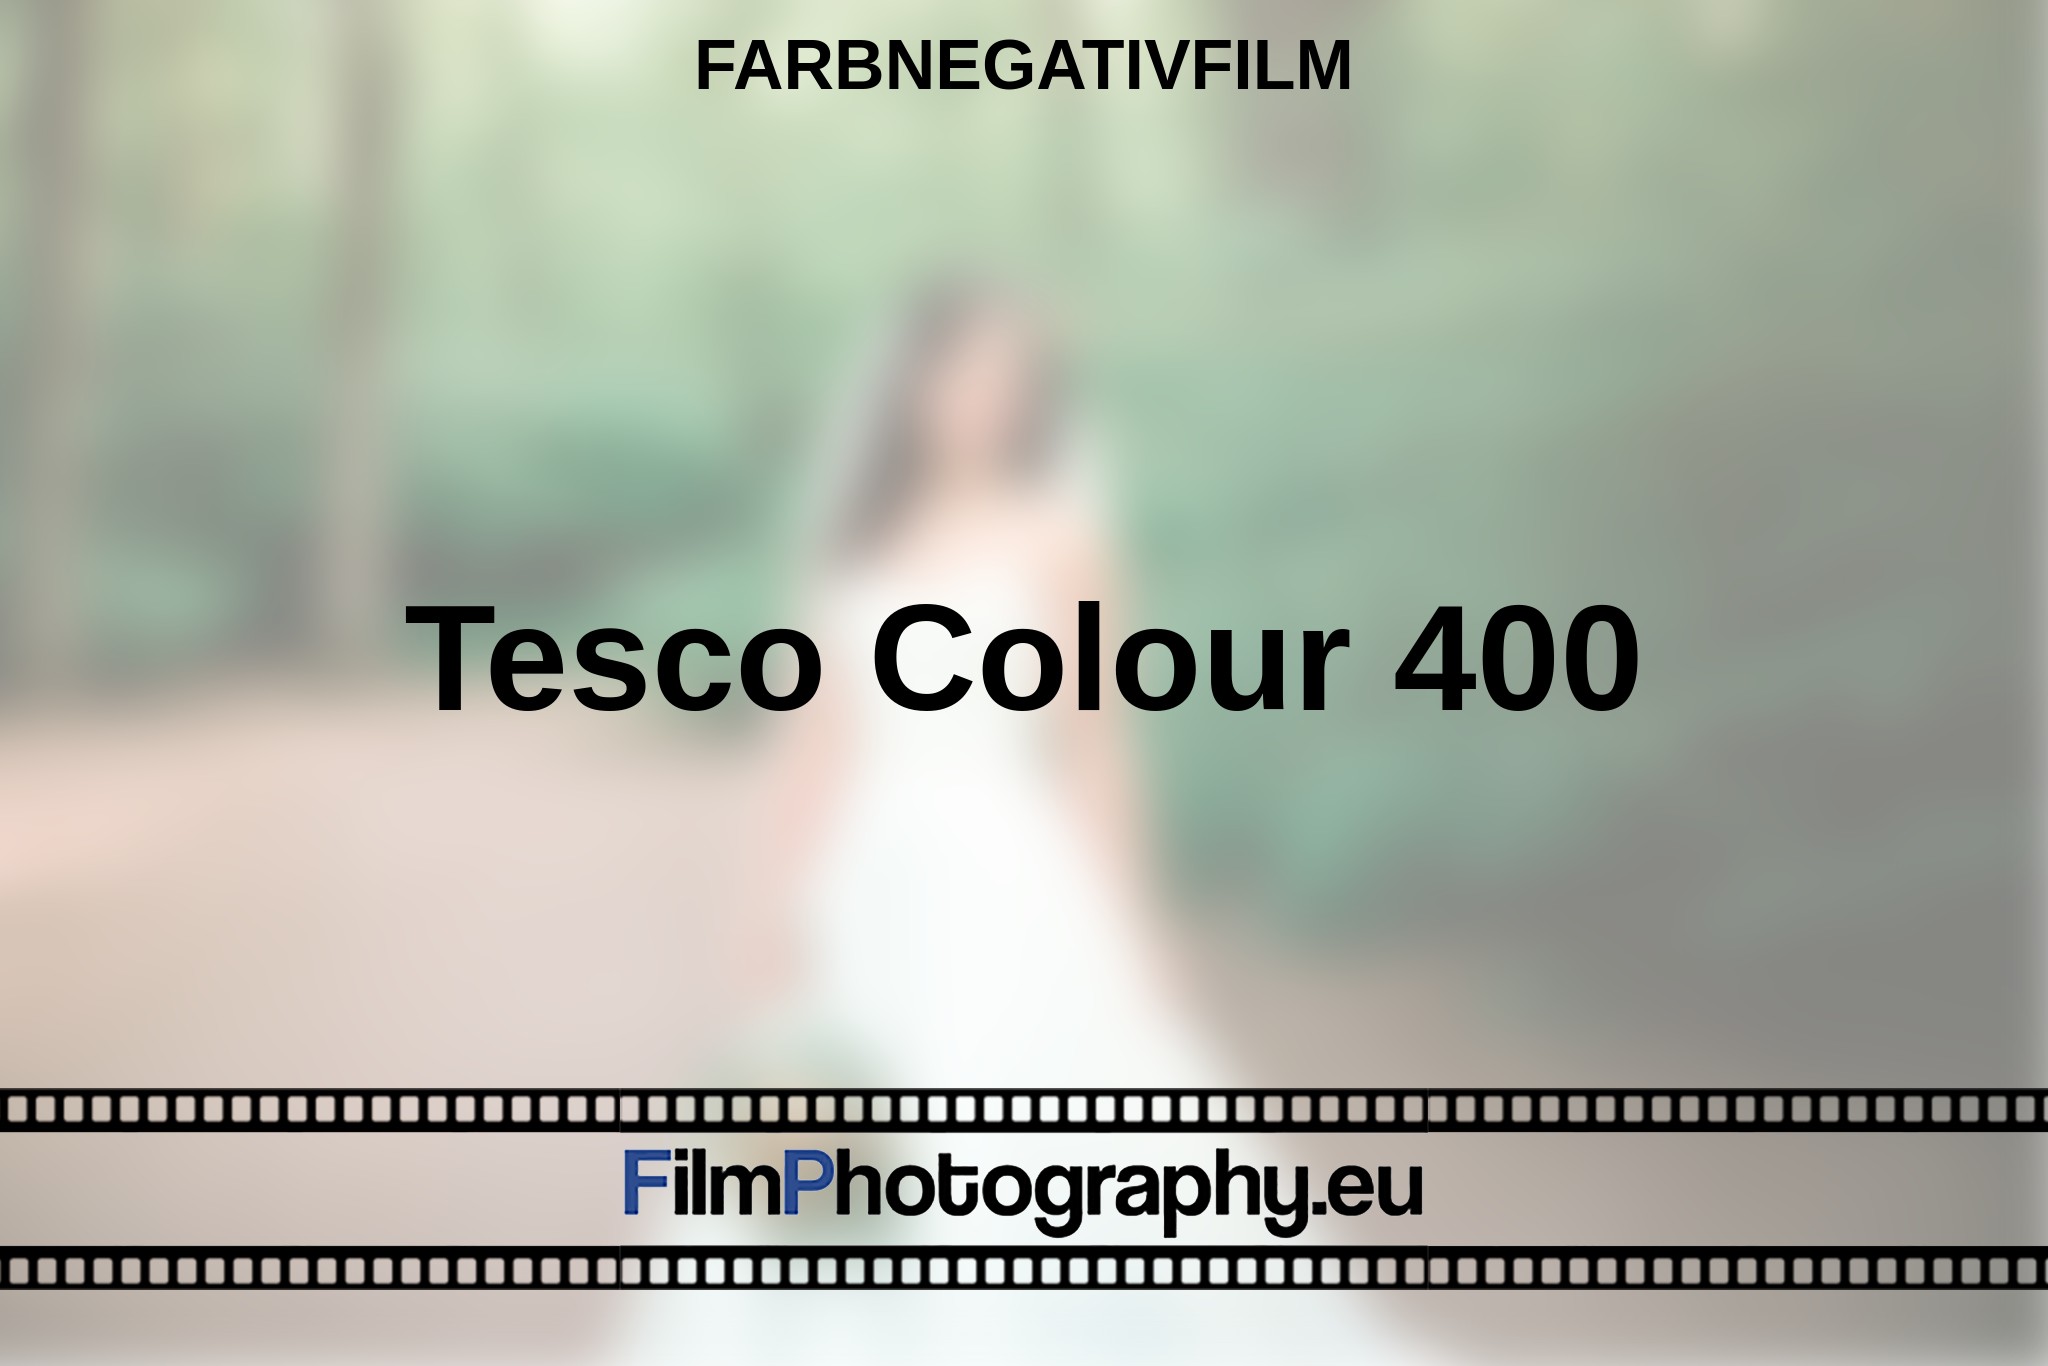 tesco-colour-400-farbnegativfilm-bnv.jpg